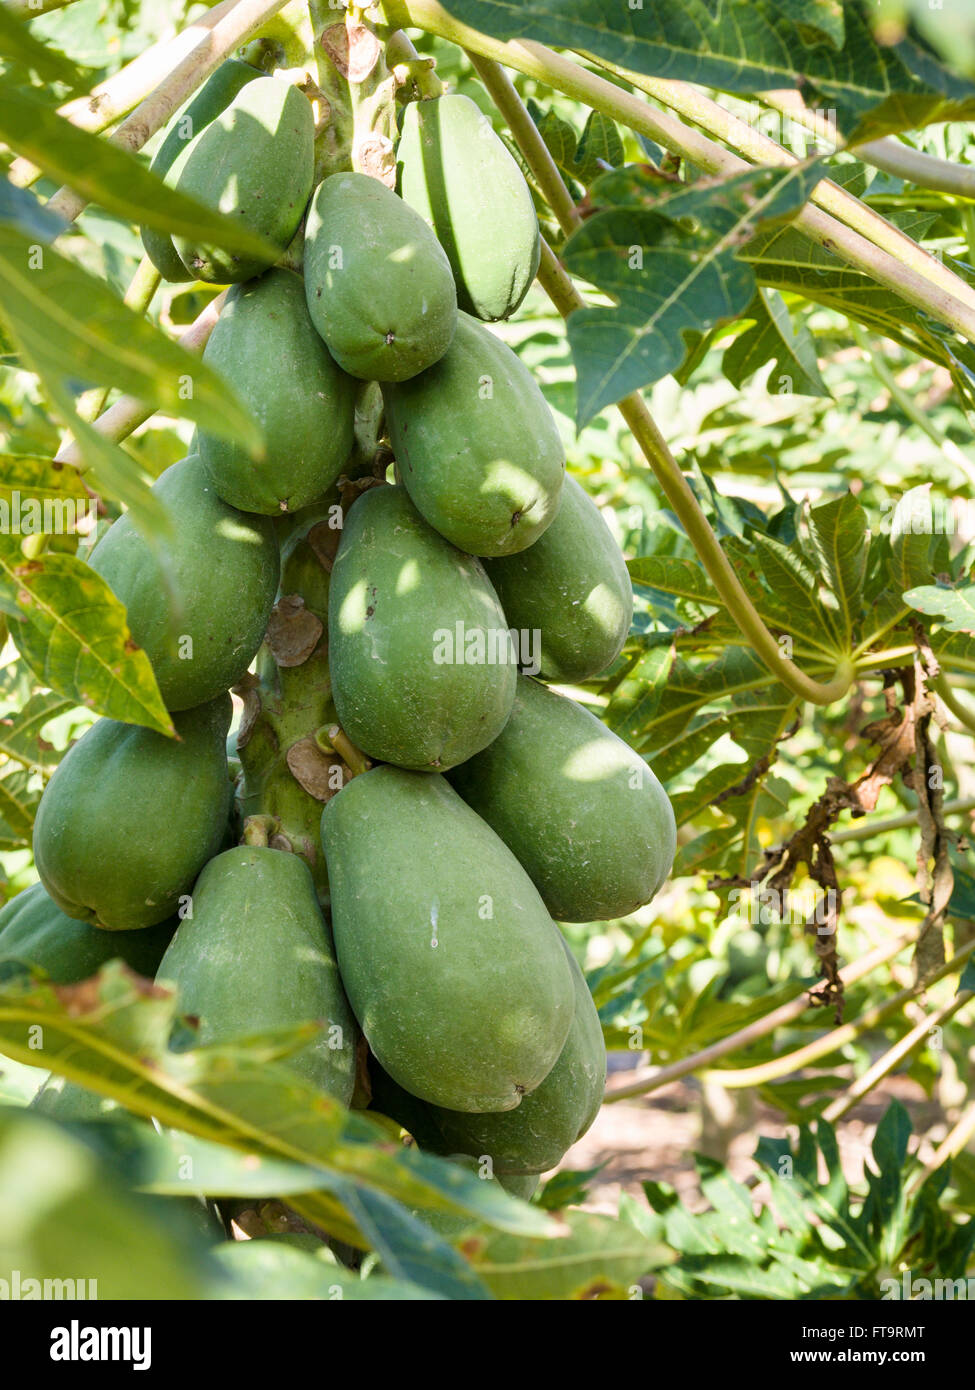 Laden with Papaya Fruit. Large green papayas  hang from the stem of a papaya tree as they ripen in a young papaya orchard Stock Photo